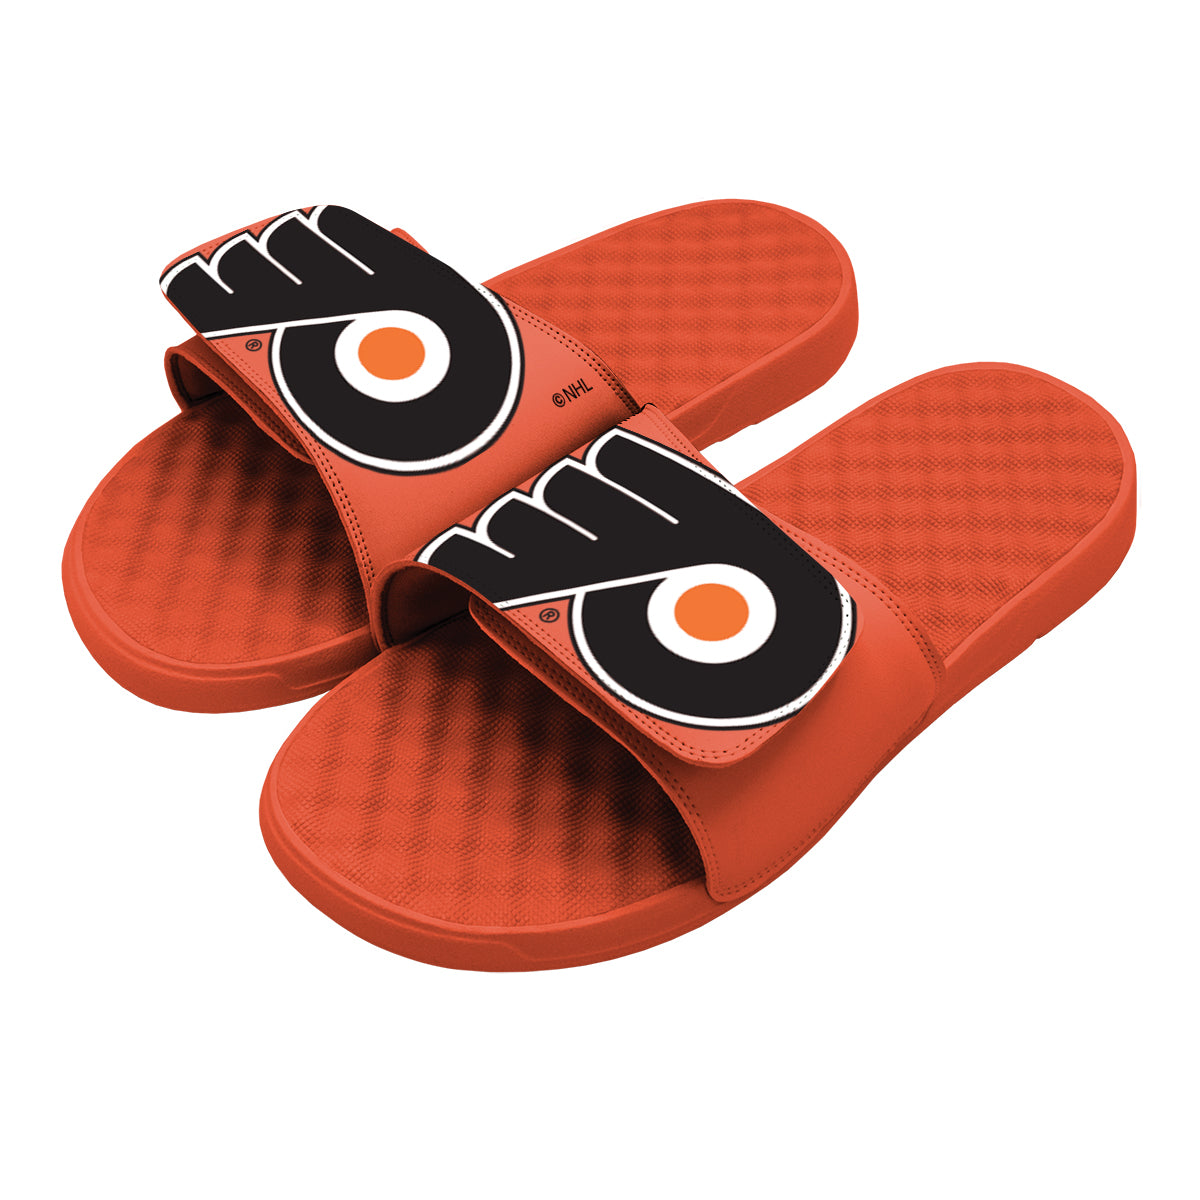 Philadelphia Flyers Blown Up Orange Slides